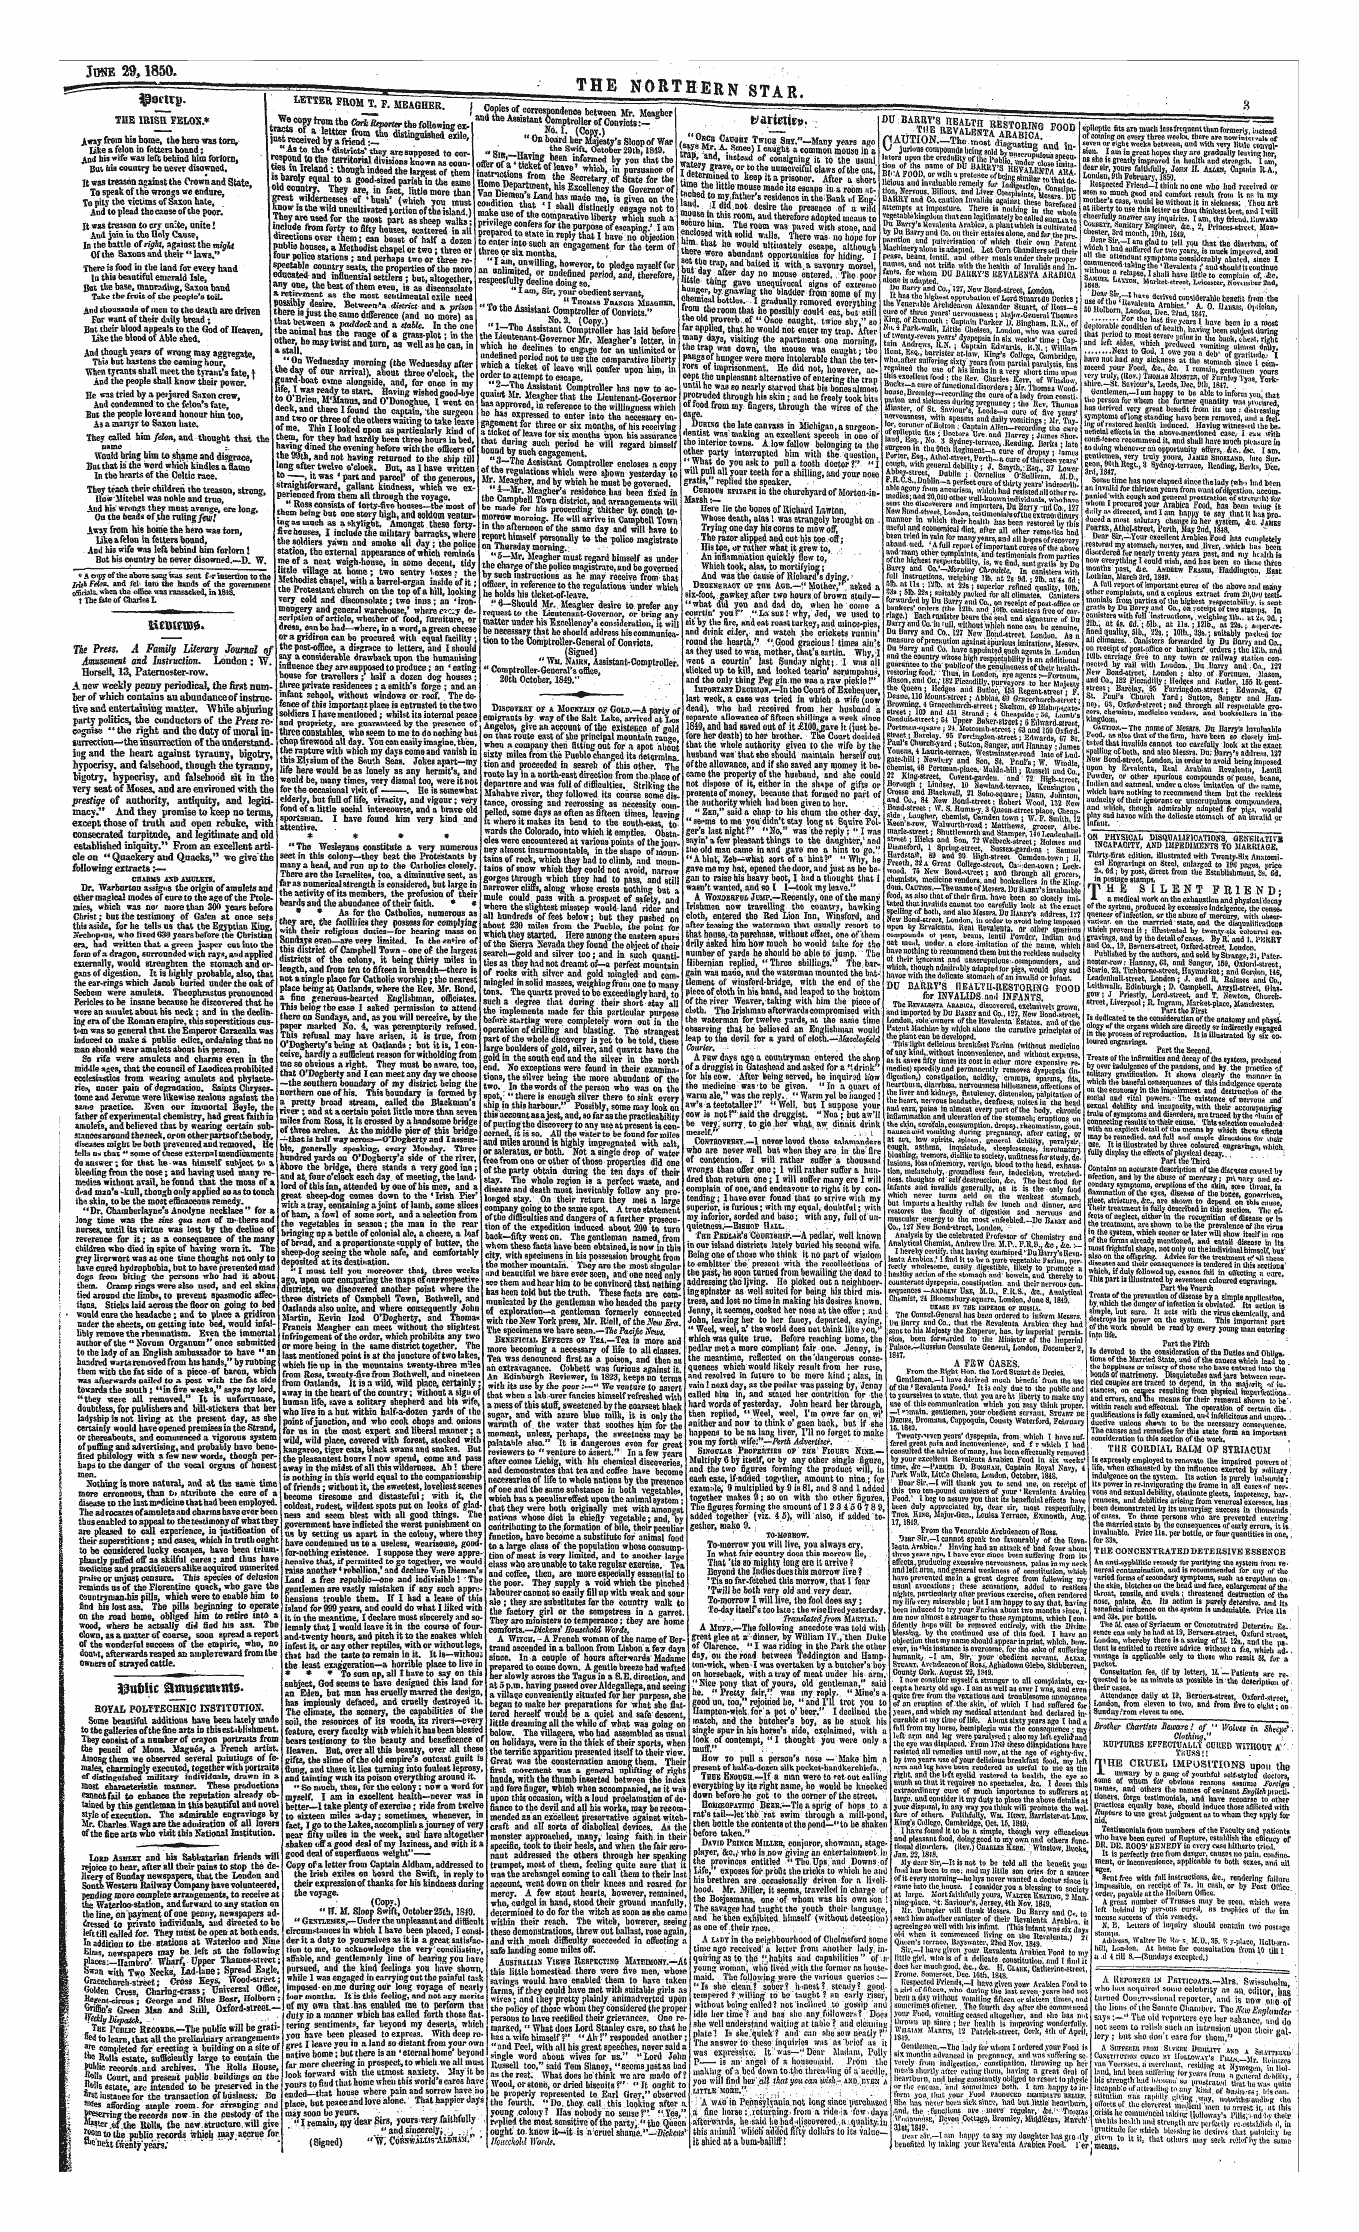 Northern Star (1837-1852): jS F Y, 1st edition - Vatiexk*. ~~ ^^7 *^=